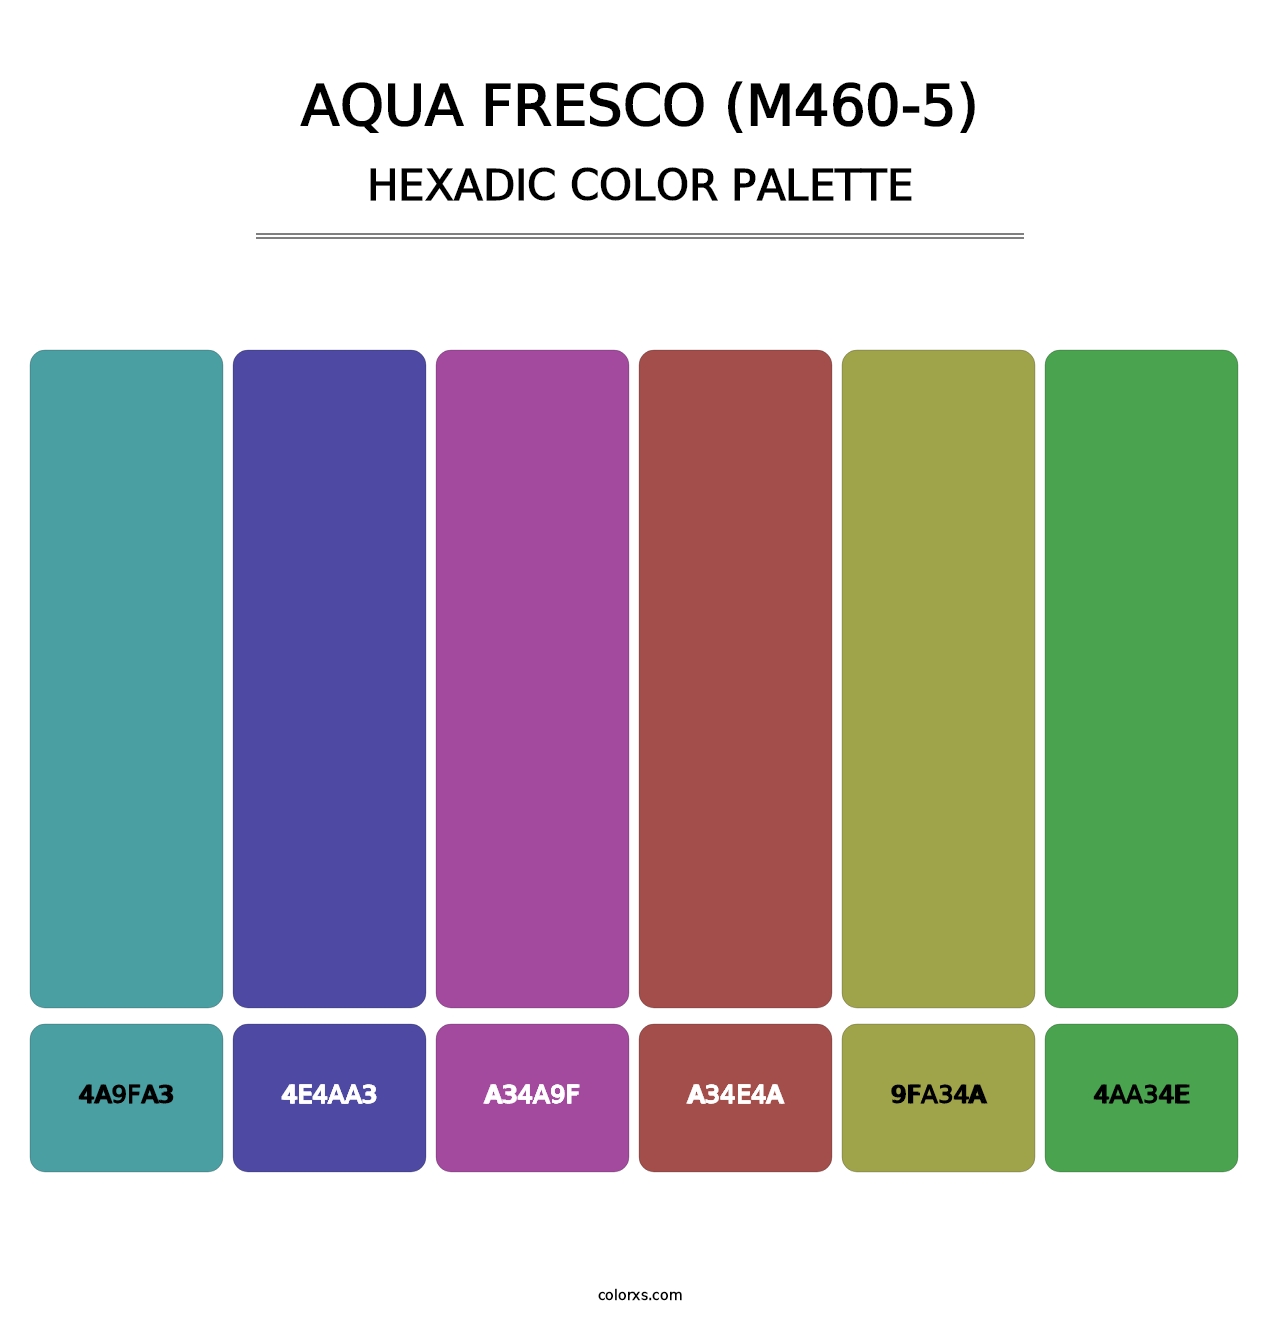 Aqua Fresco (M460-5) - Hexadic Color Palette